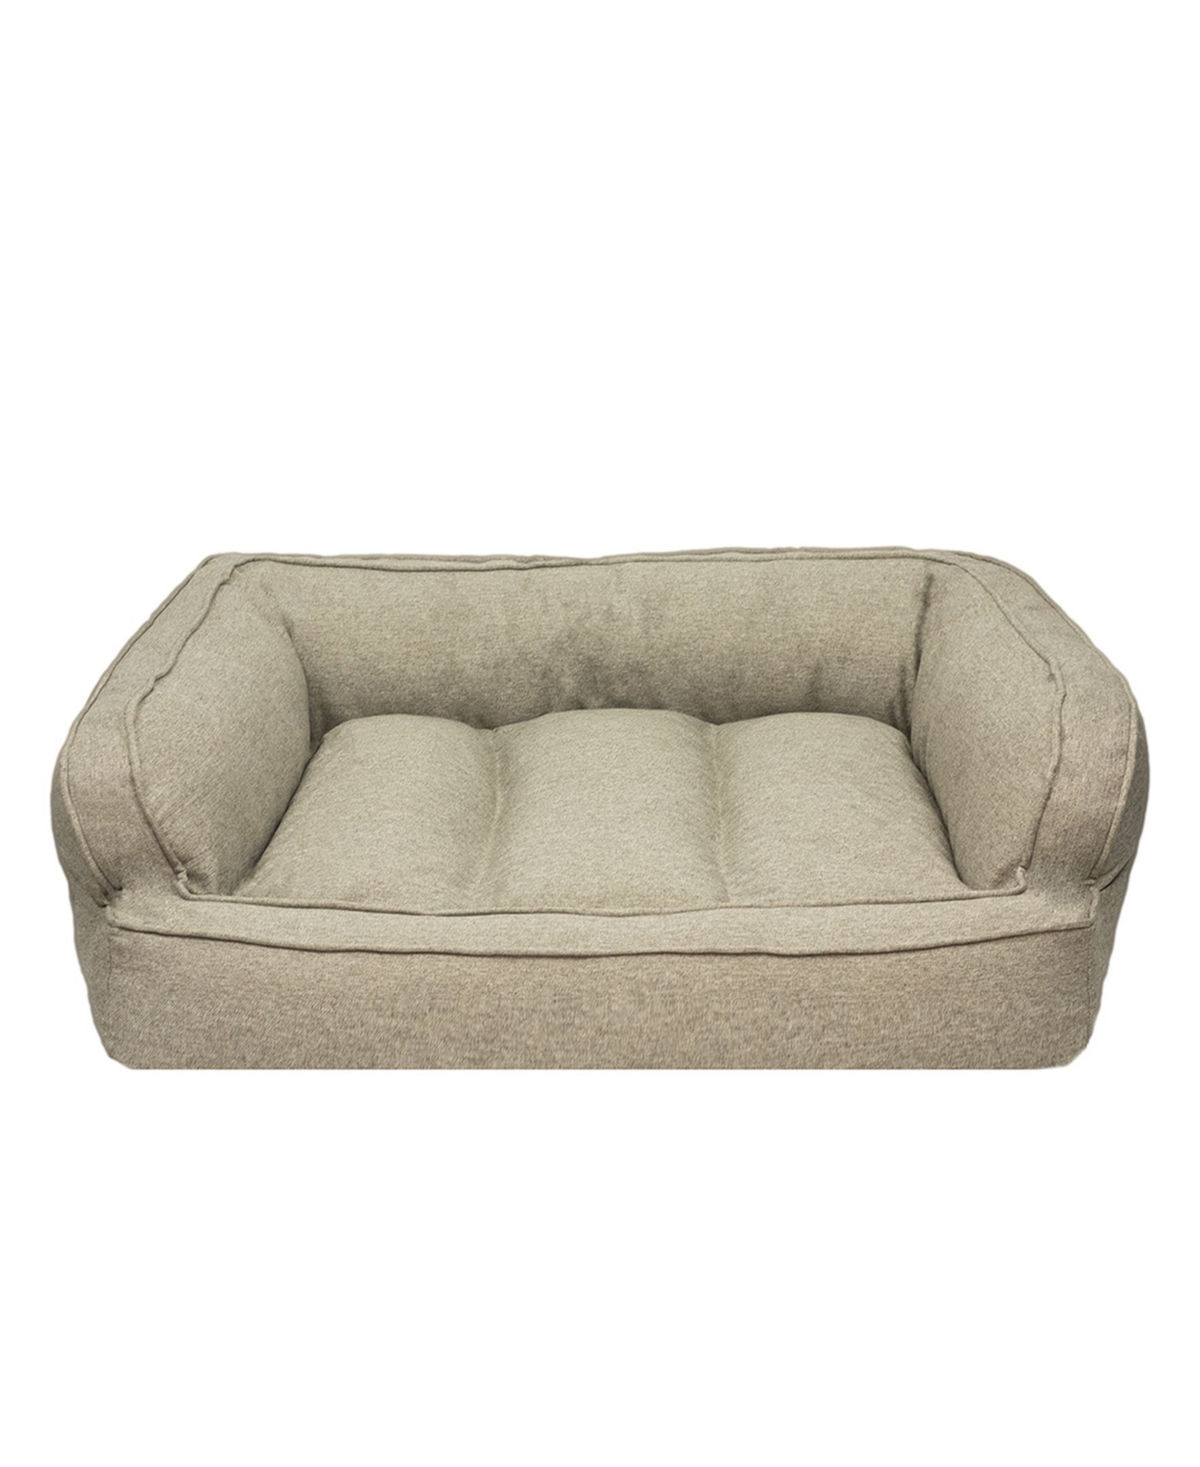 Arlee Memory Foam Sofa and Couch Style Pet Bed, Large - Wanut Dark Tan